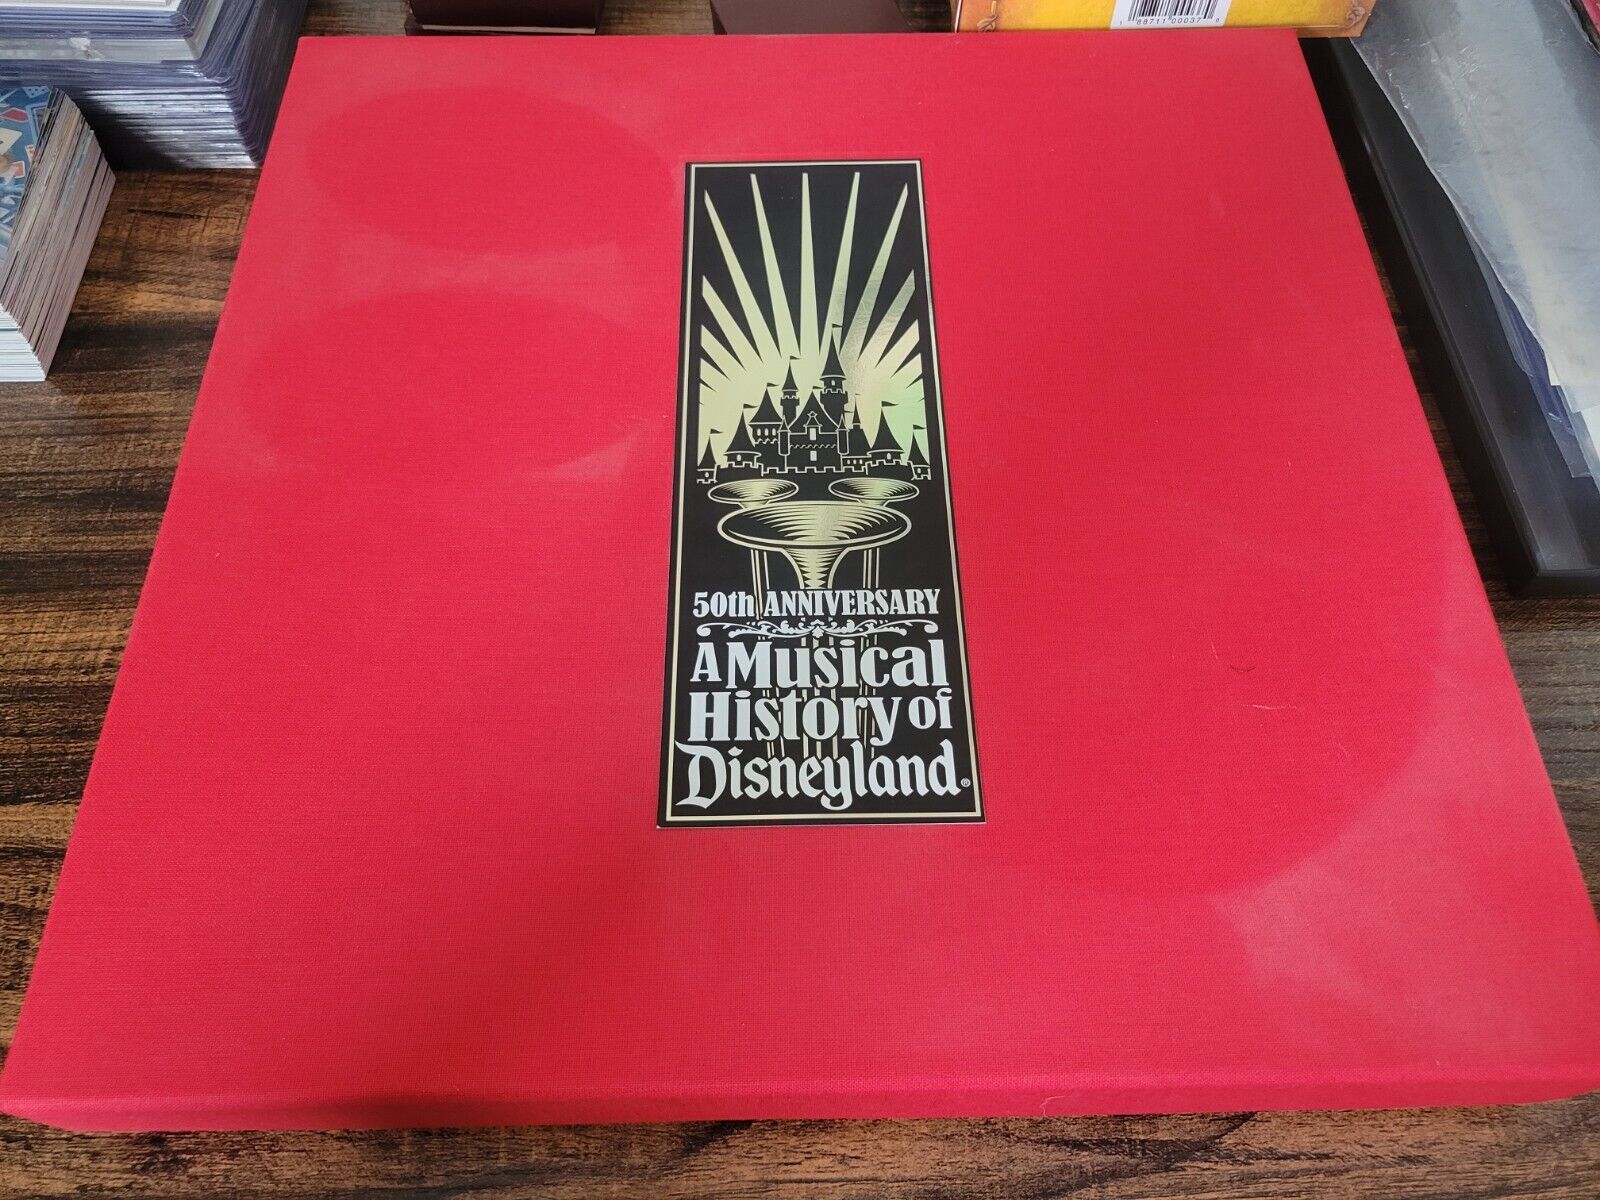 50th Anniversary A Musical History Of Disneyland 6 Disc CD Box Set